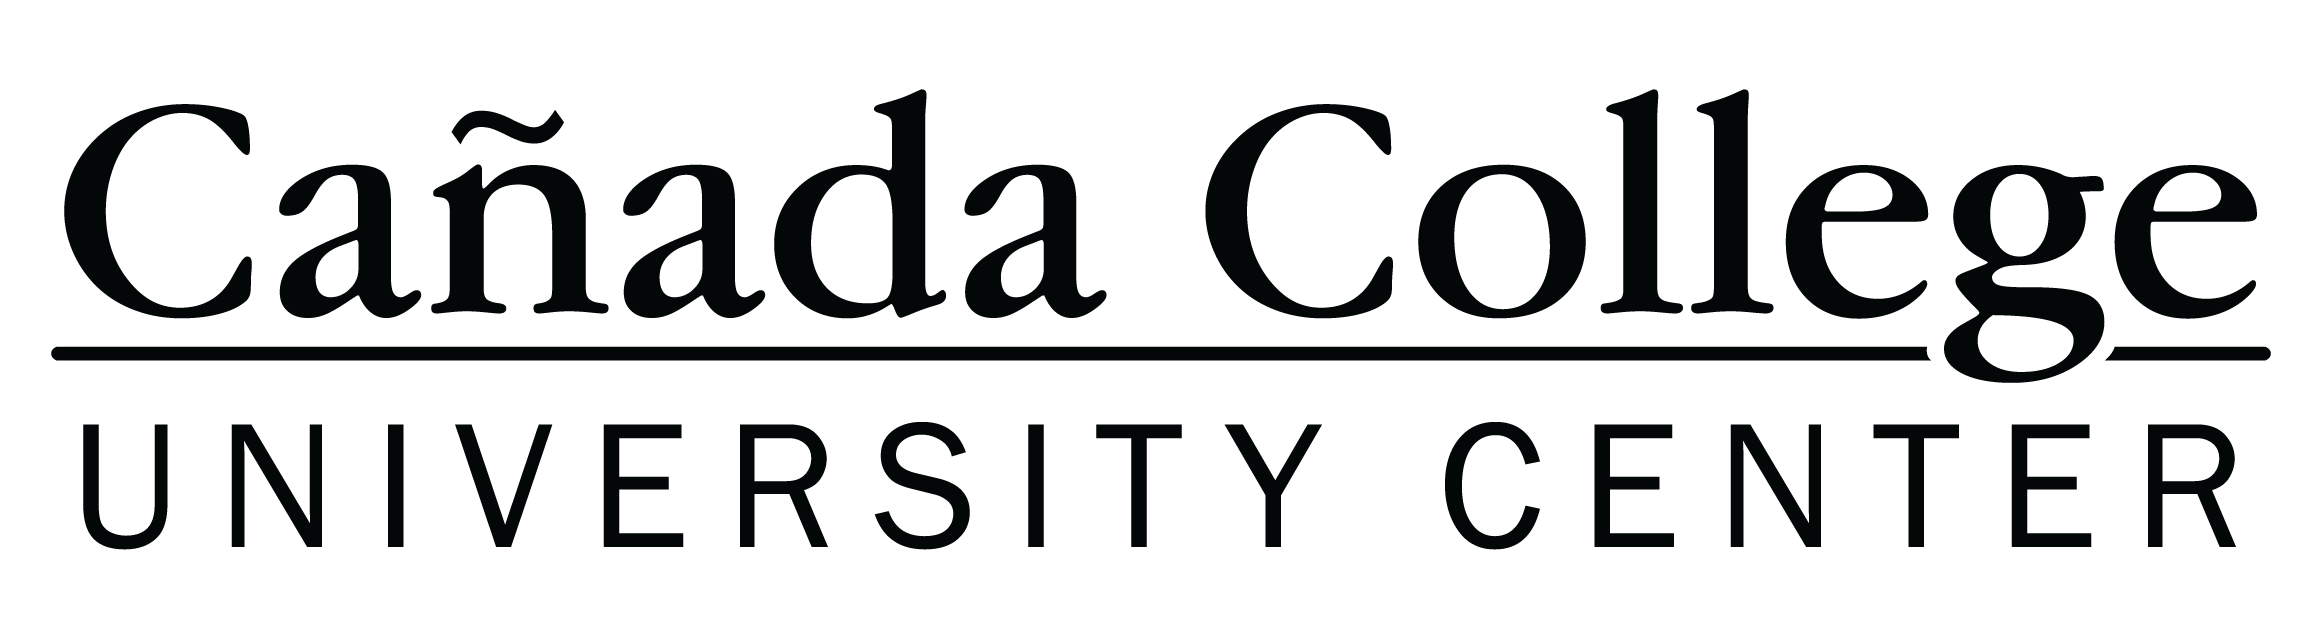 University Center Logotype